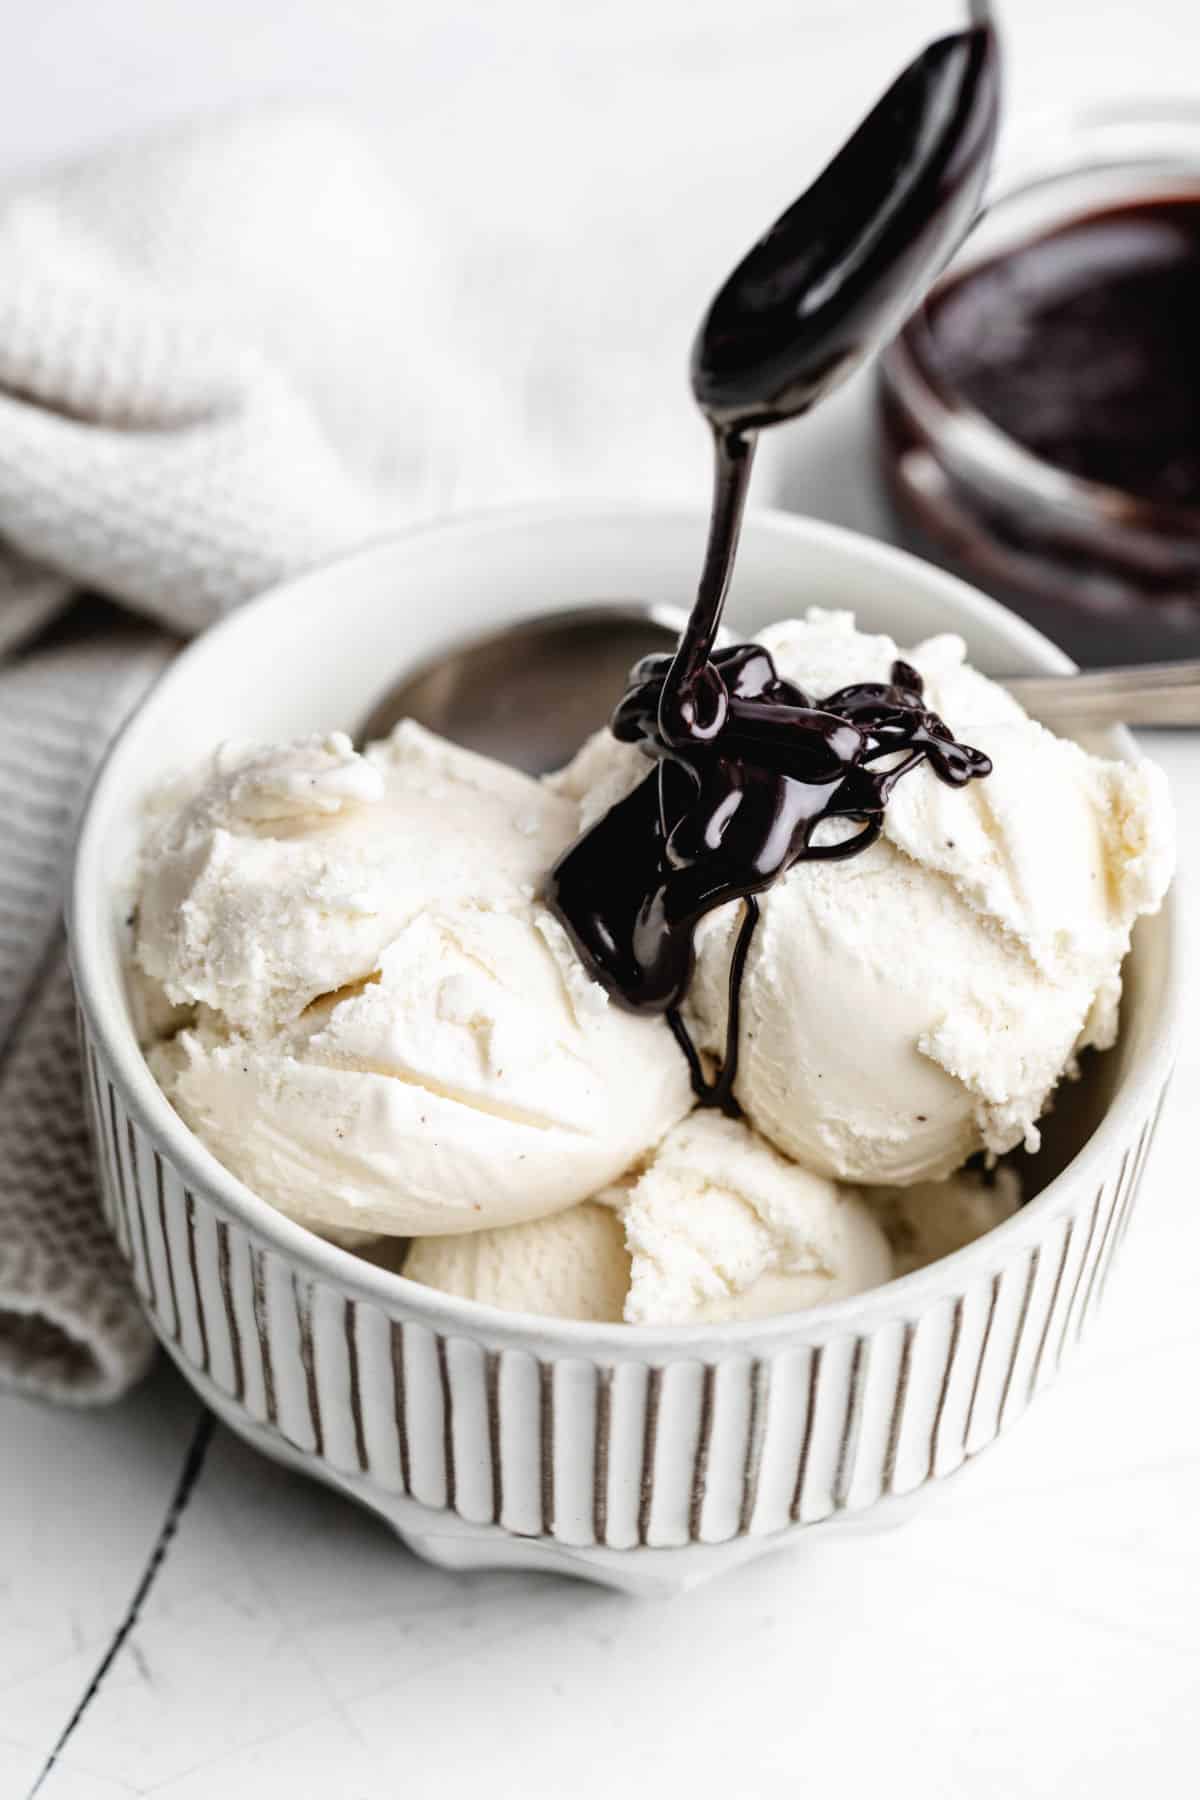 A spoon drizzling hot fudge over scoops of vanilla ice cream. 